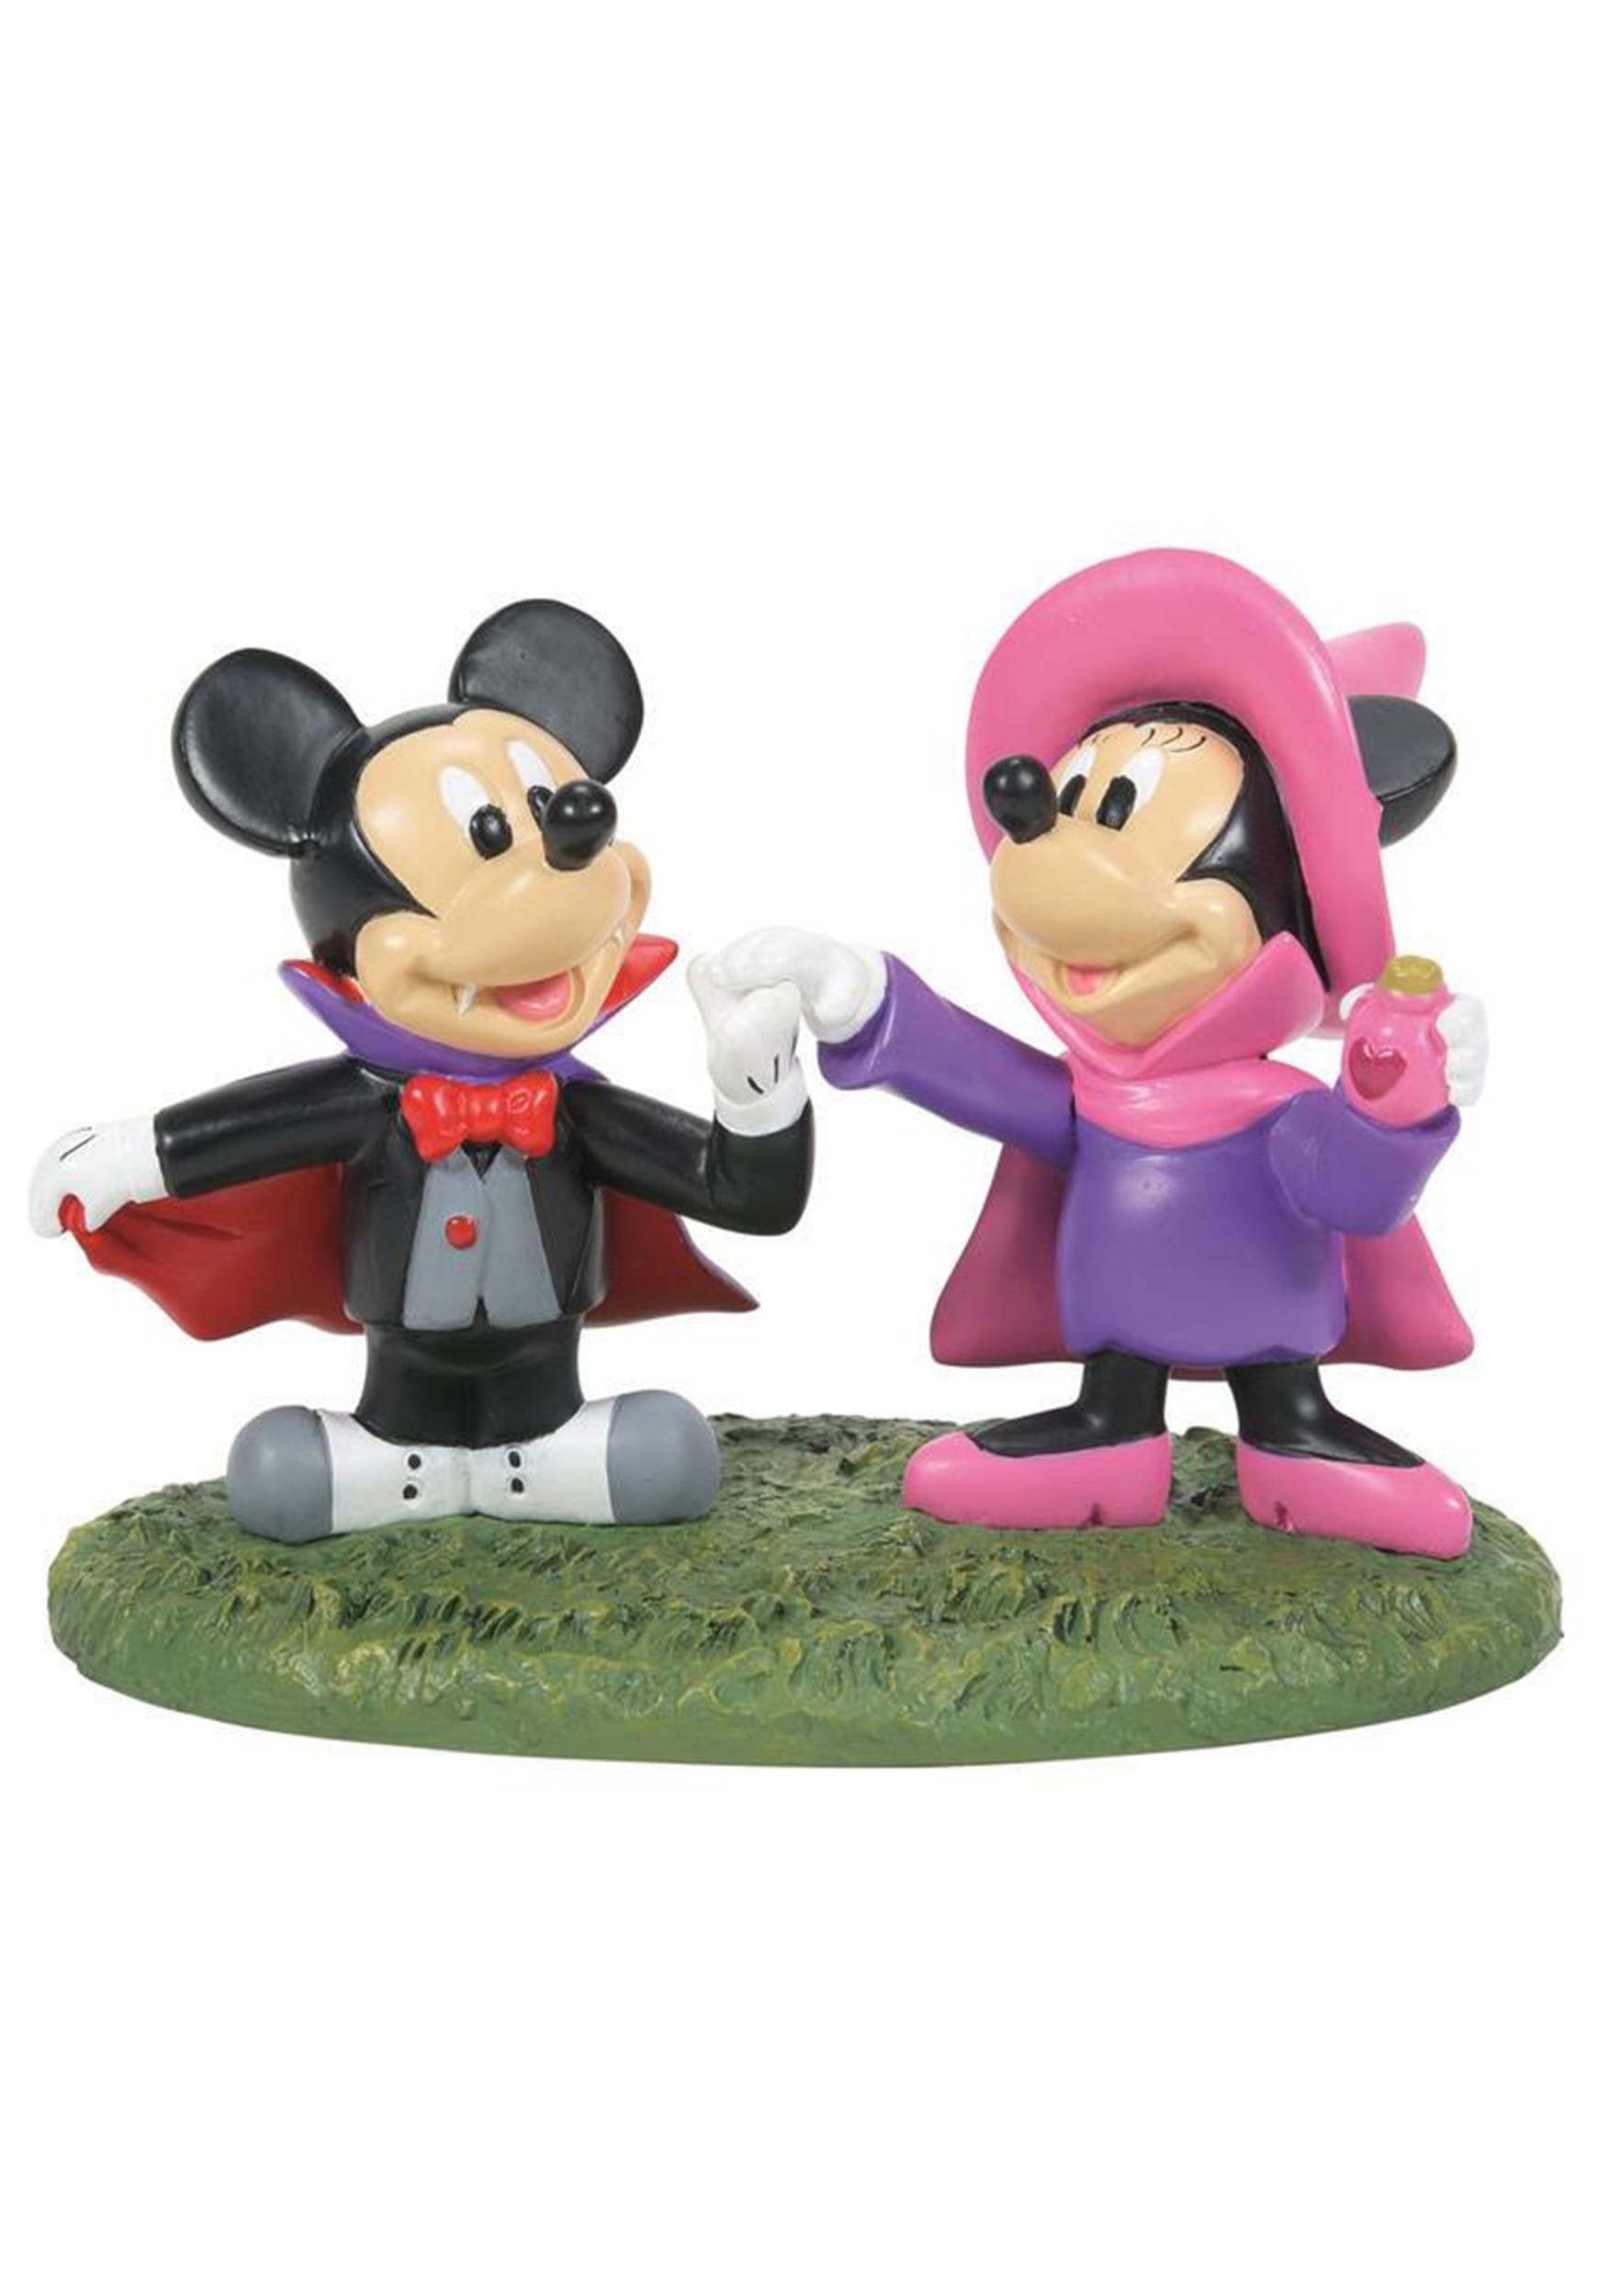 Mickey & Minnie Costume Fun Figure from Department 56